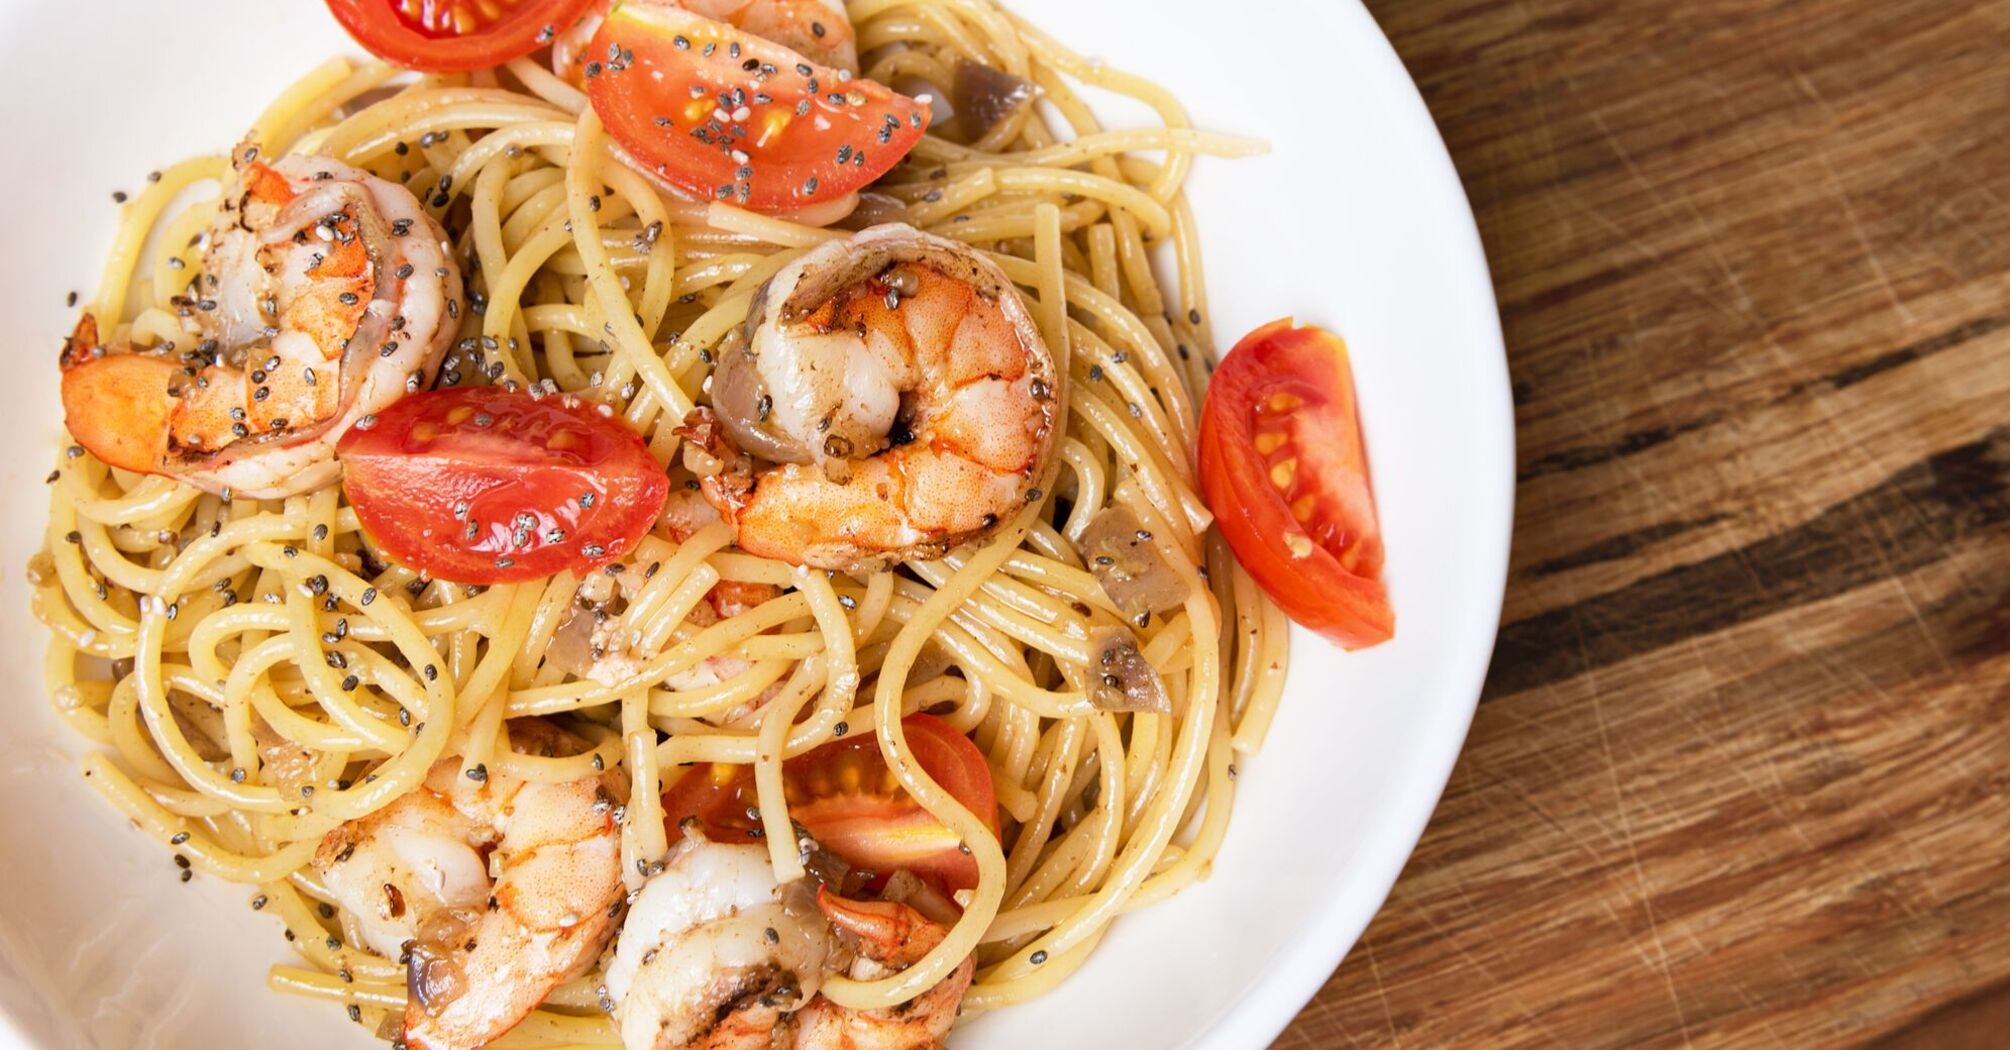 Pasta with shrimp: add Mediterranean flavors to your diet